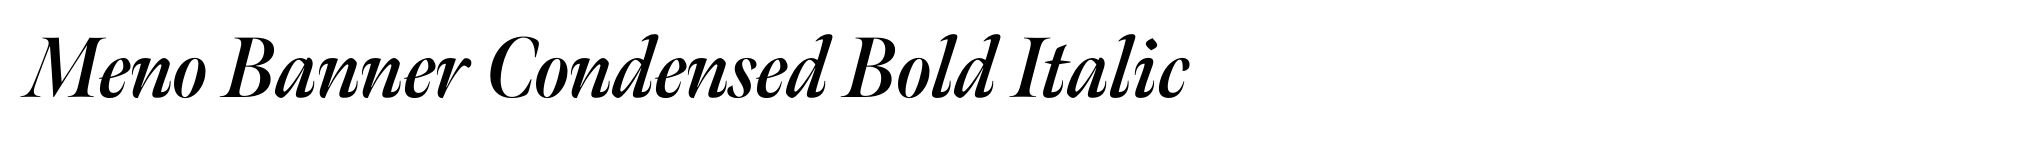 Meno Banner Condensed Bold Italic image